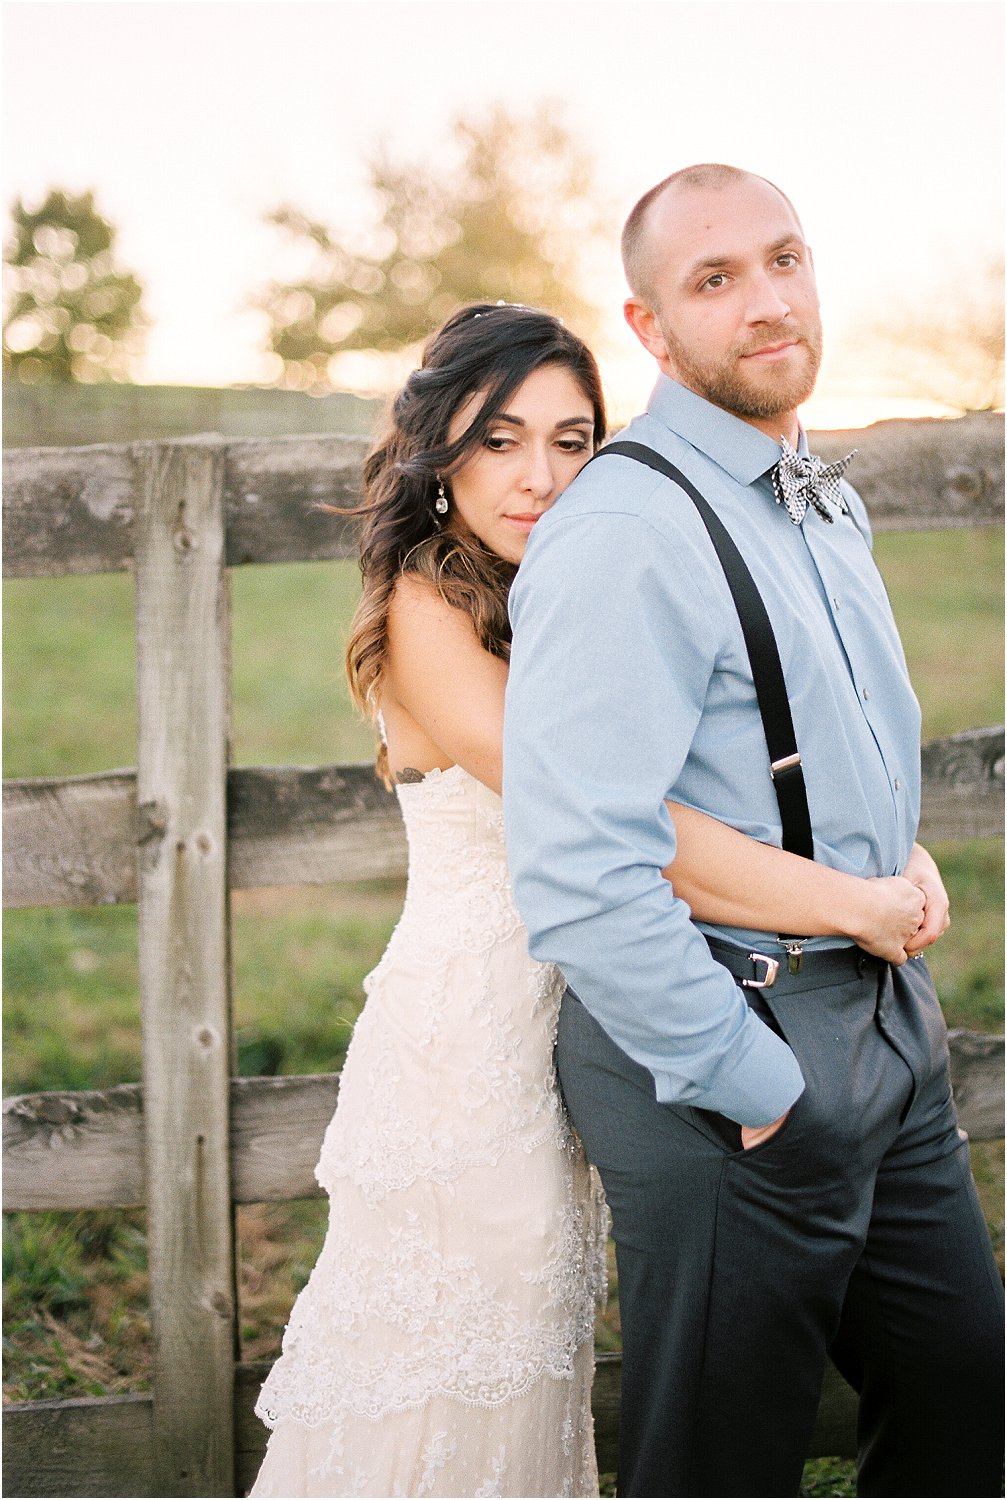 Inara & Cody's Modern Bohemian Wedding - The Stables at Hunter Valley ...